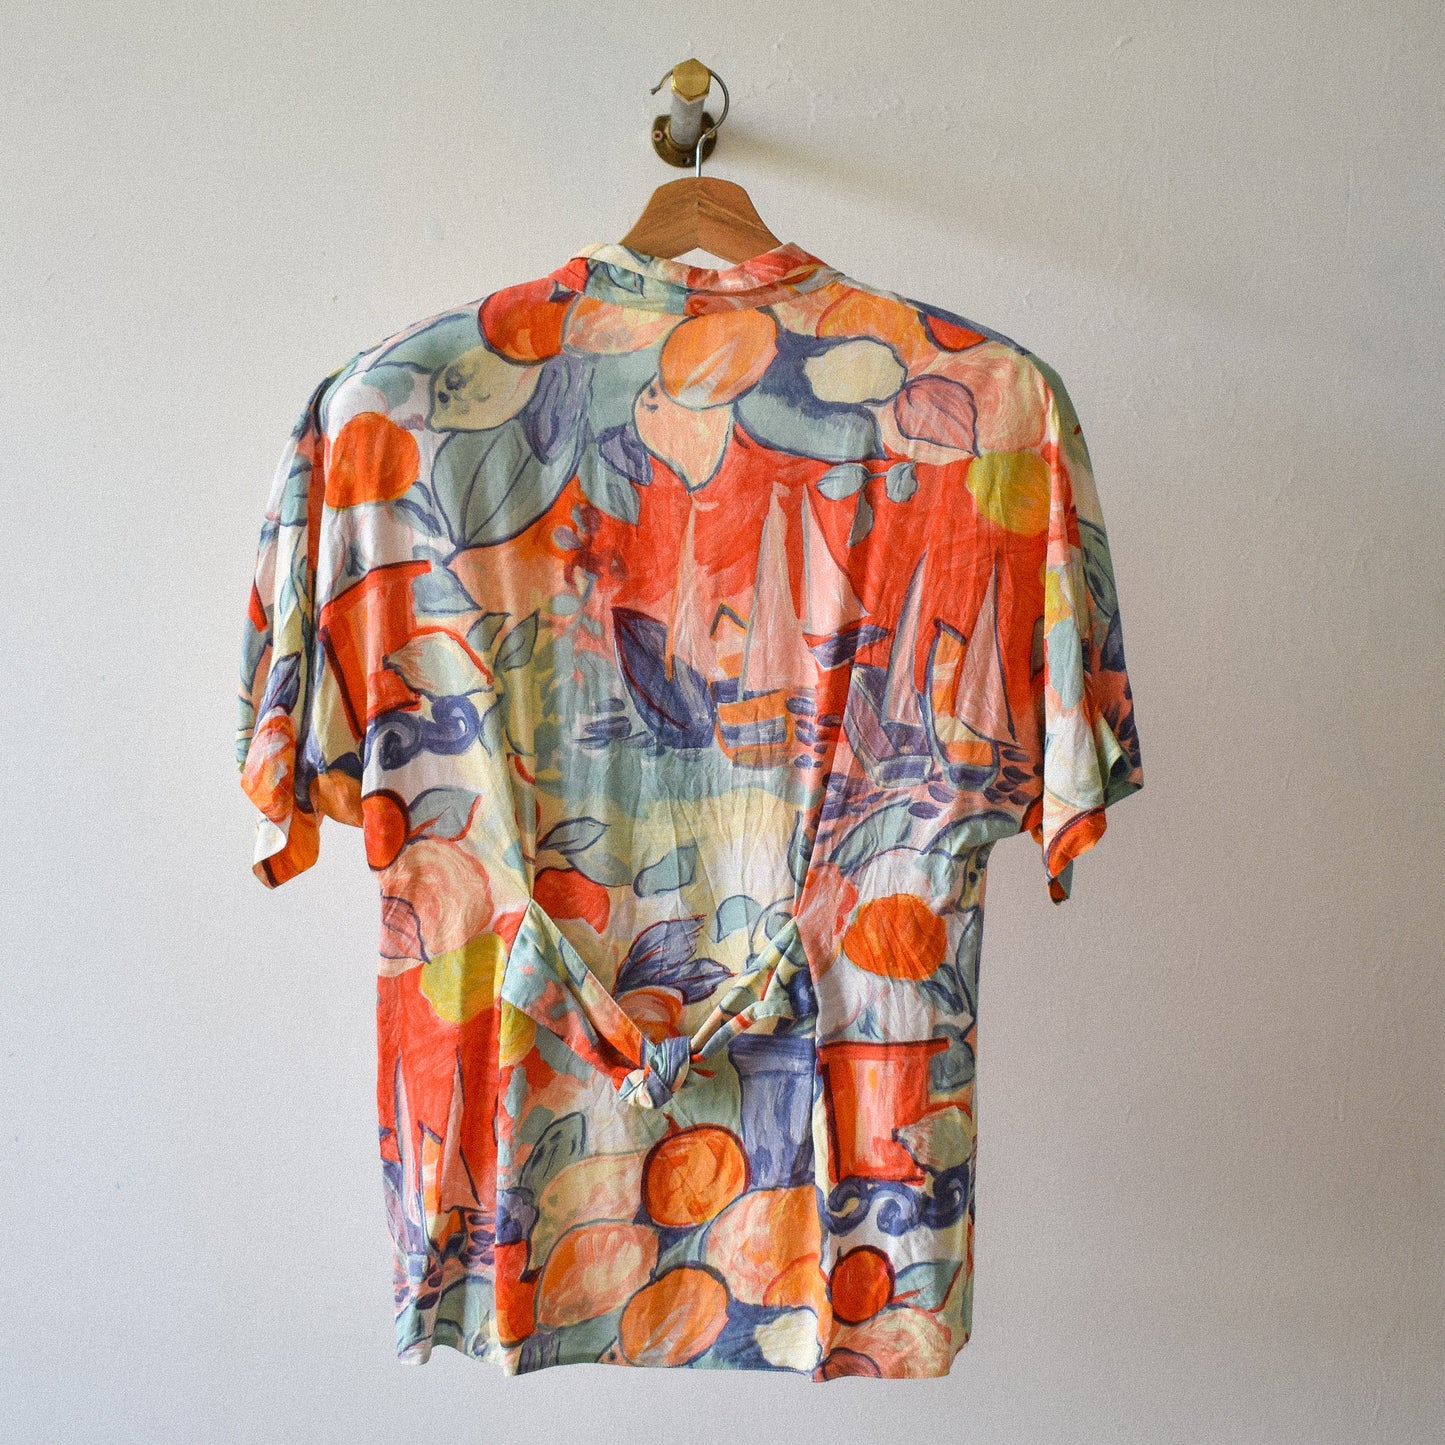 sinatra-vintage-blouse-in-verschillende-kleuren